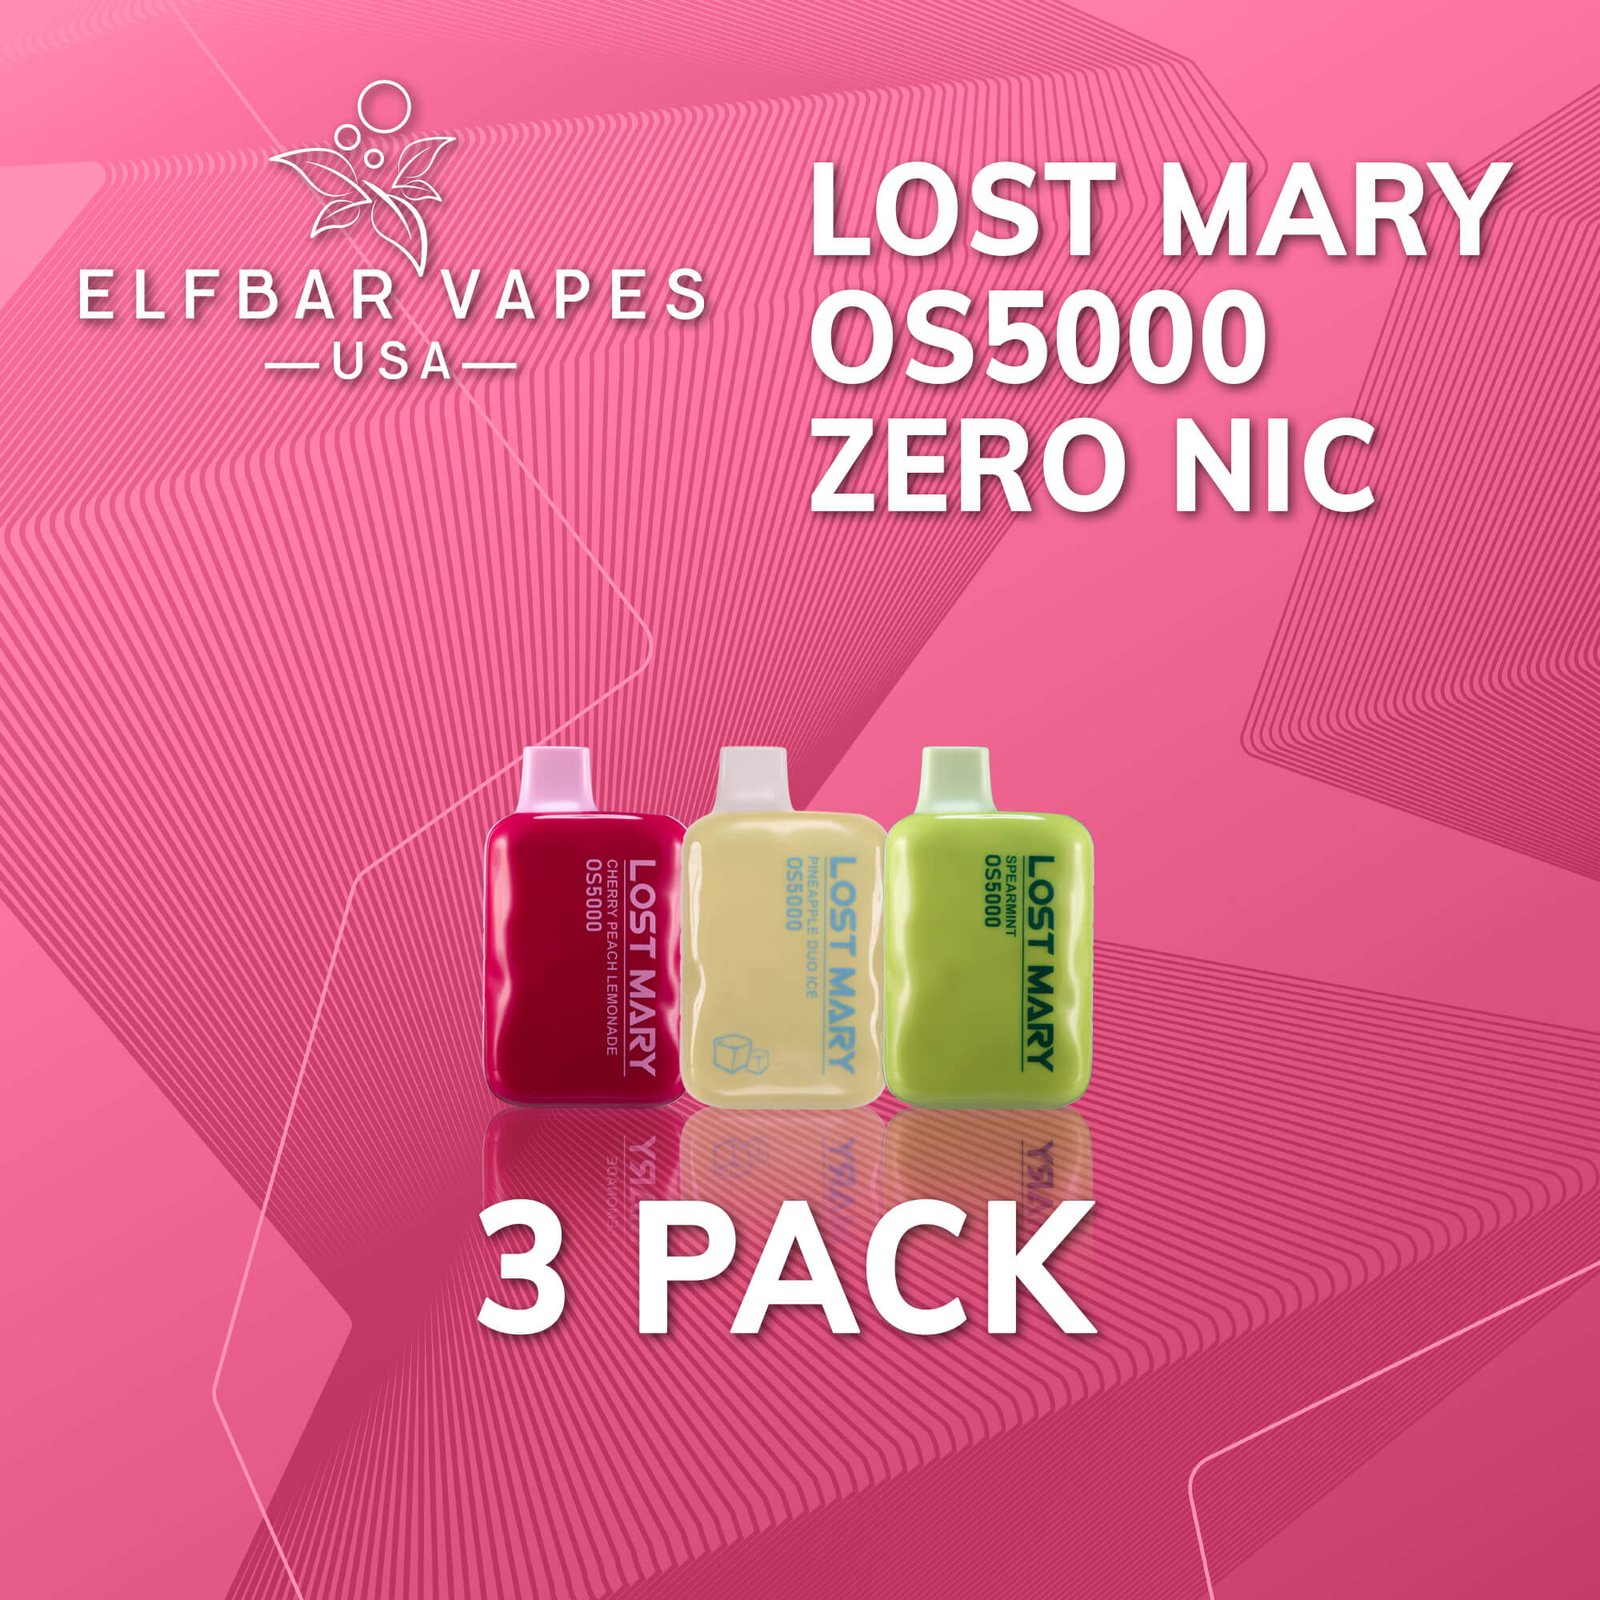 Lost Mary OS5000 Zero Nicotine 3 Pack